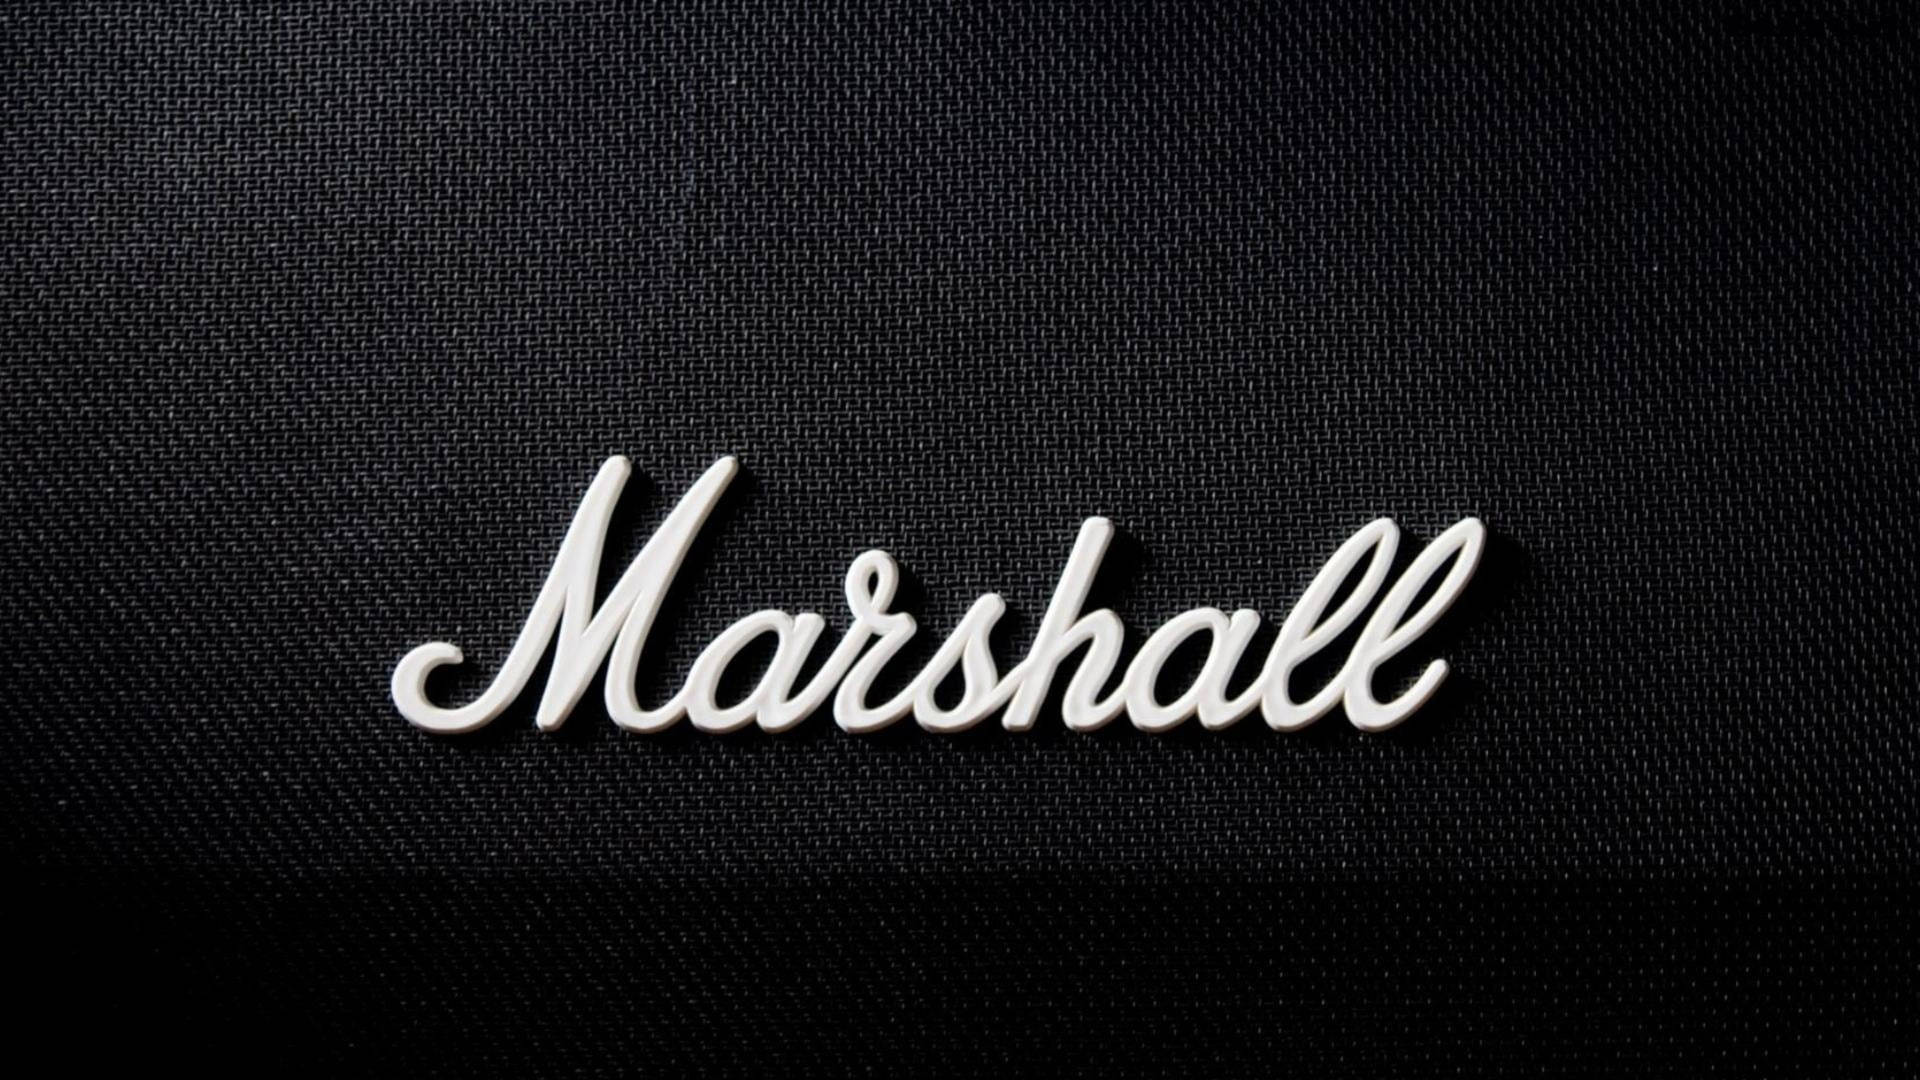 Marshall Logo On Black Mesh Screen Background